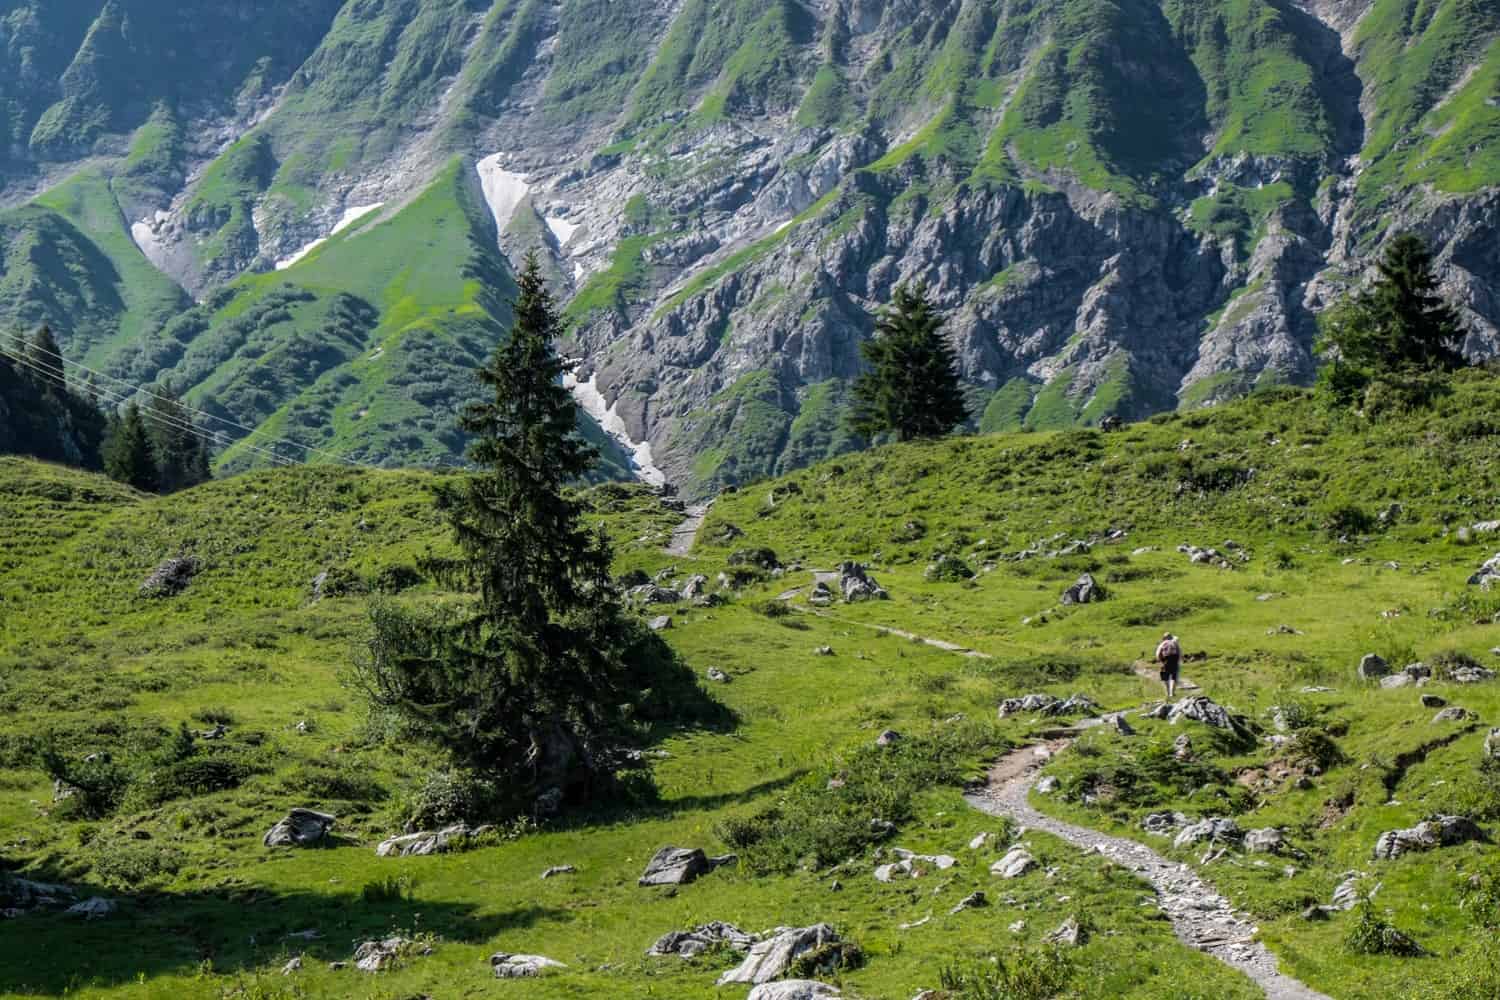 Hiking trails through the mountains in Lech, Austria